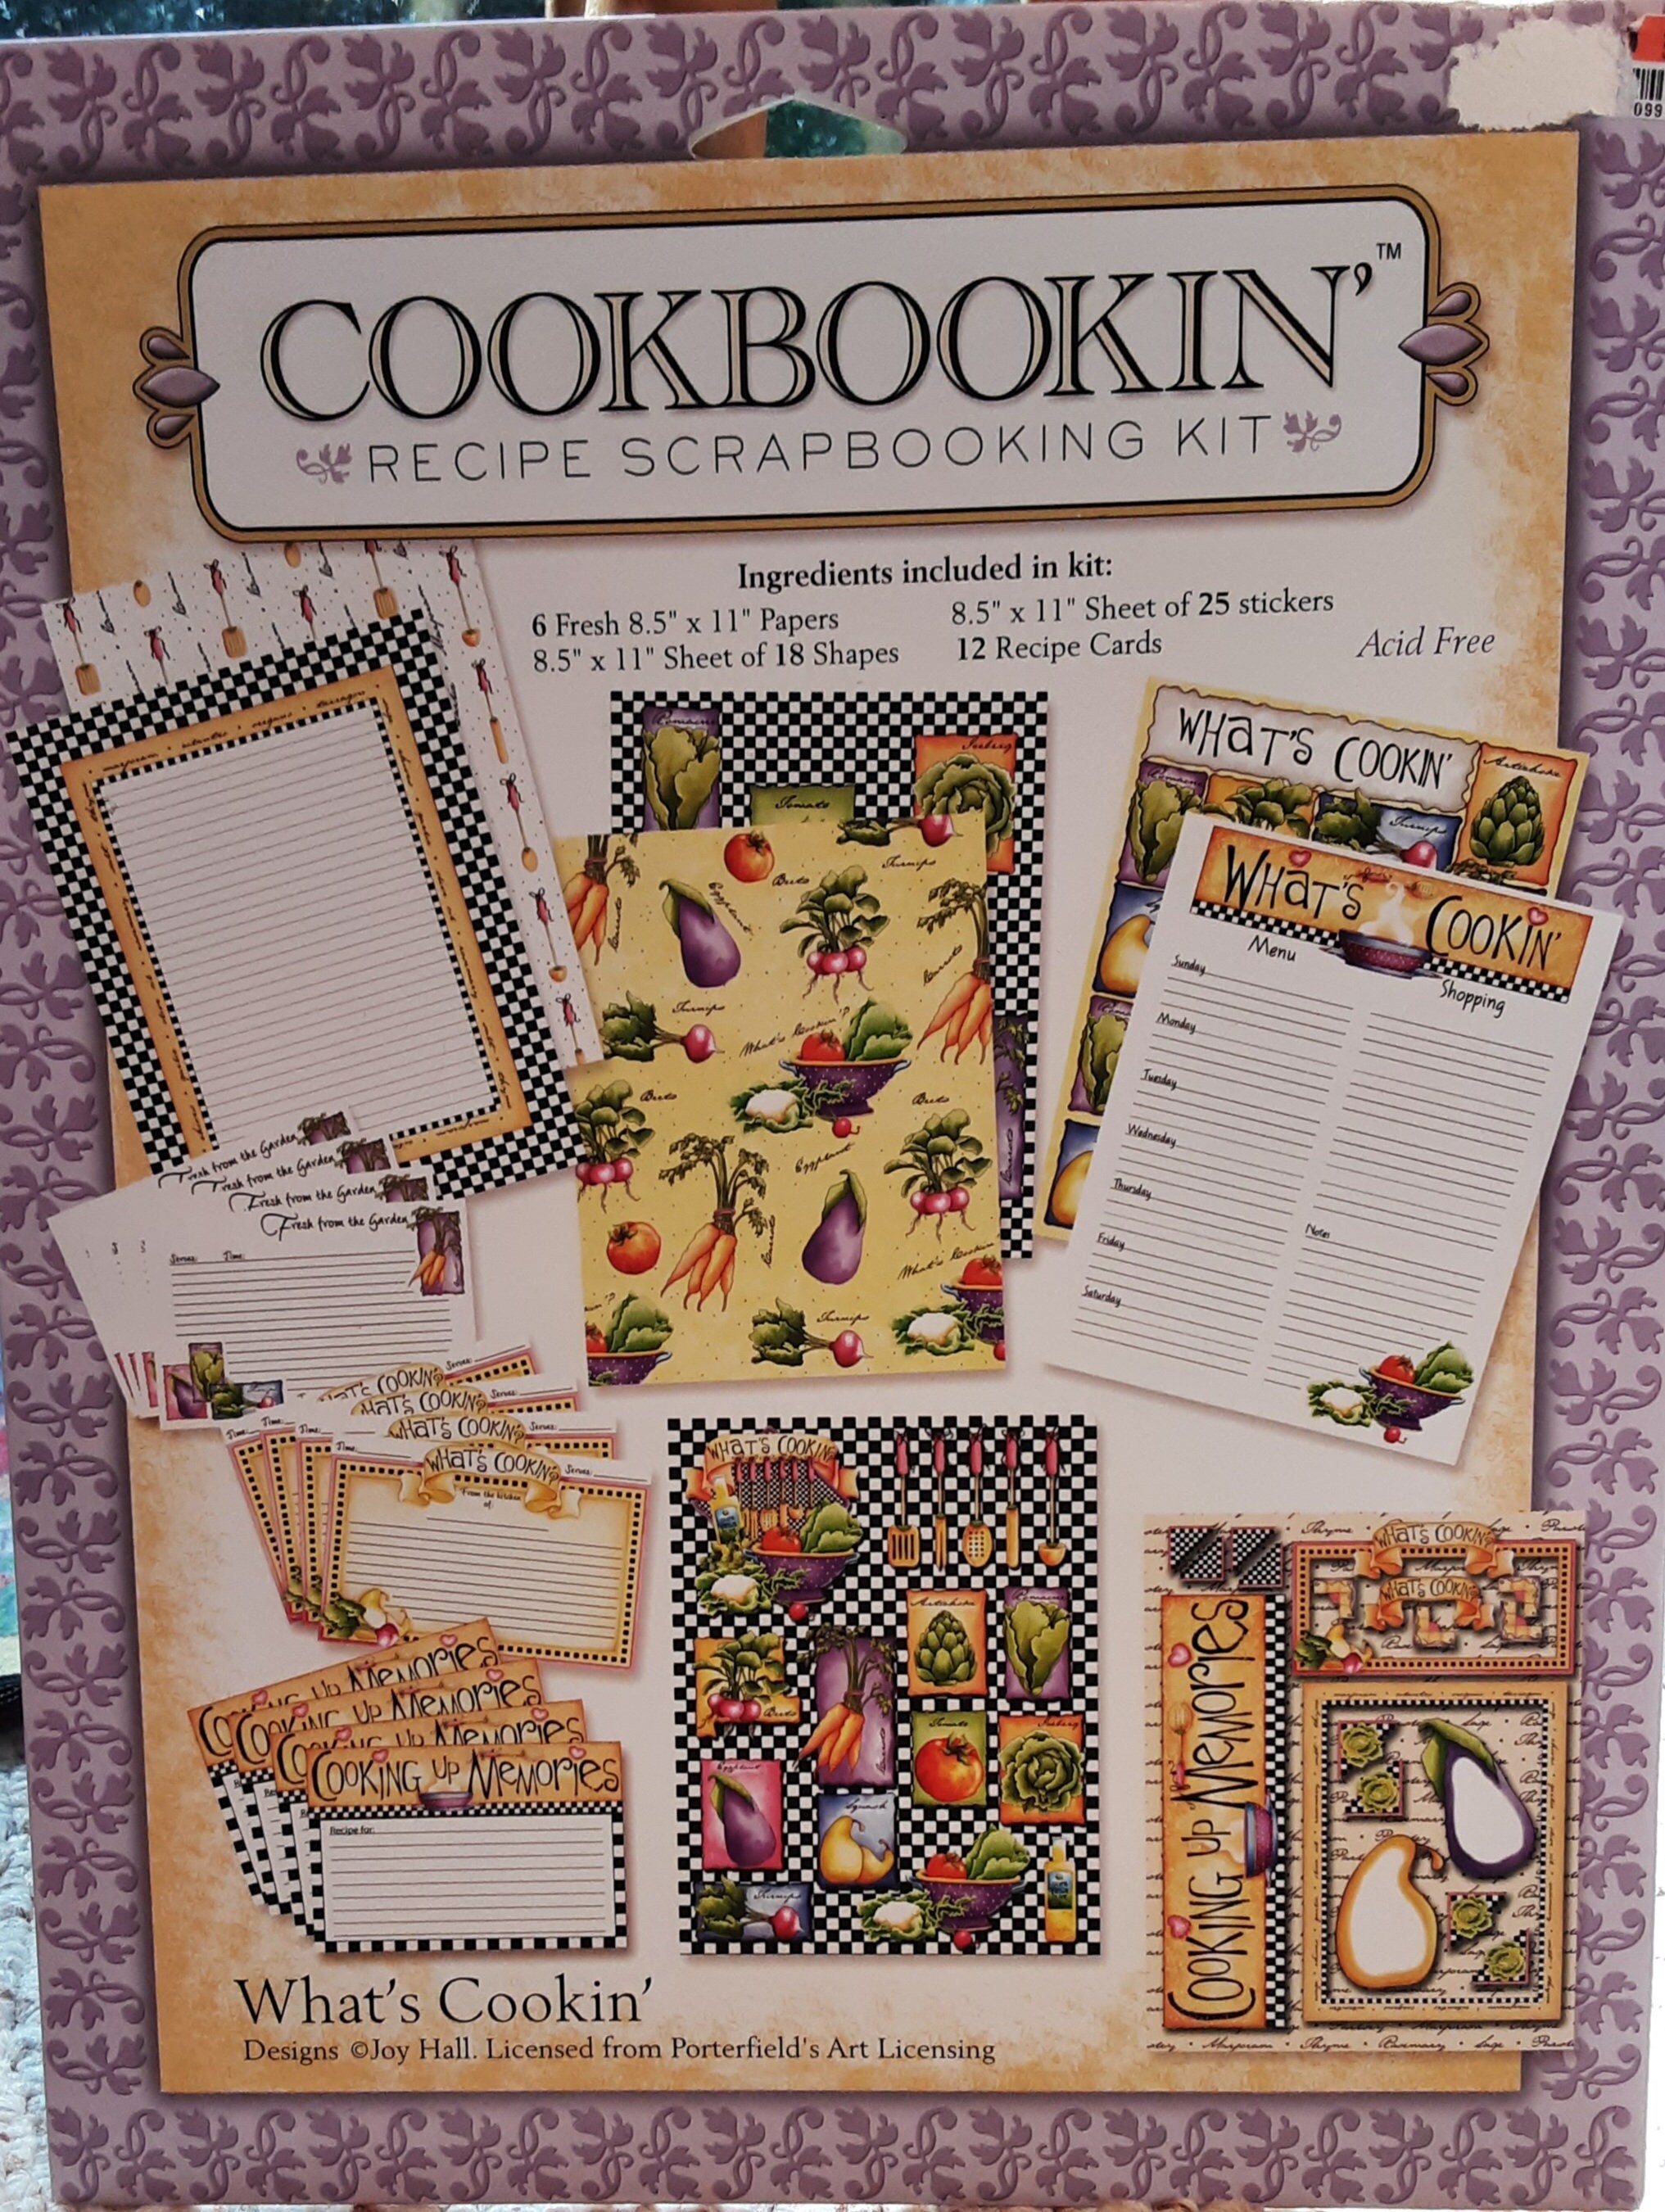 Cookbookin' Recipe Scrapbooking Kit